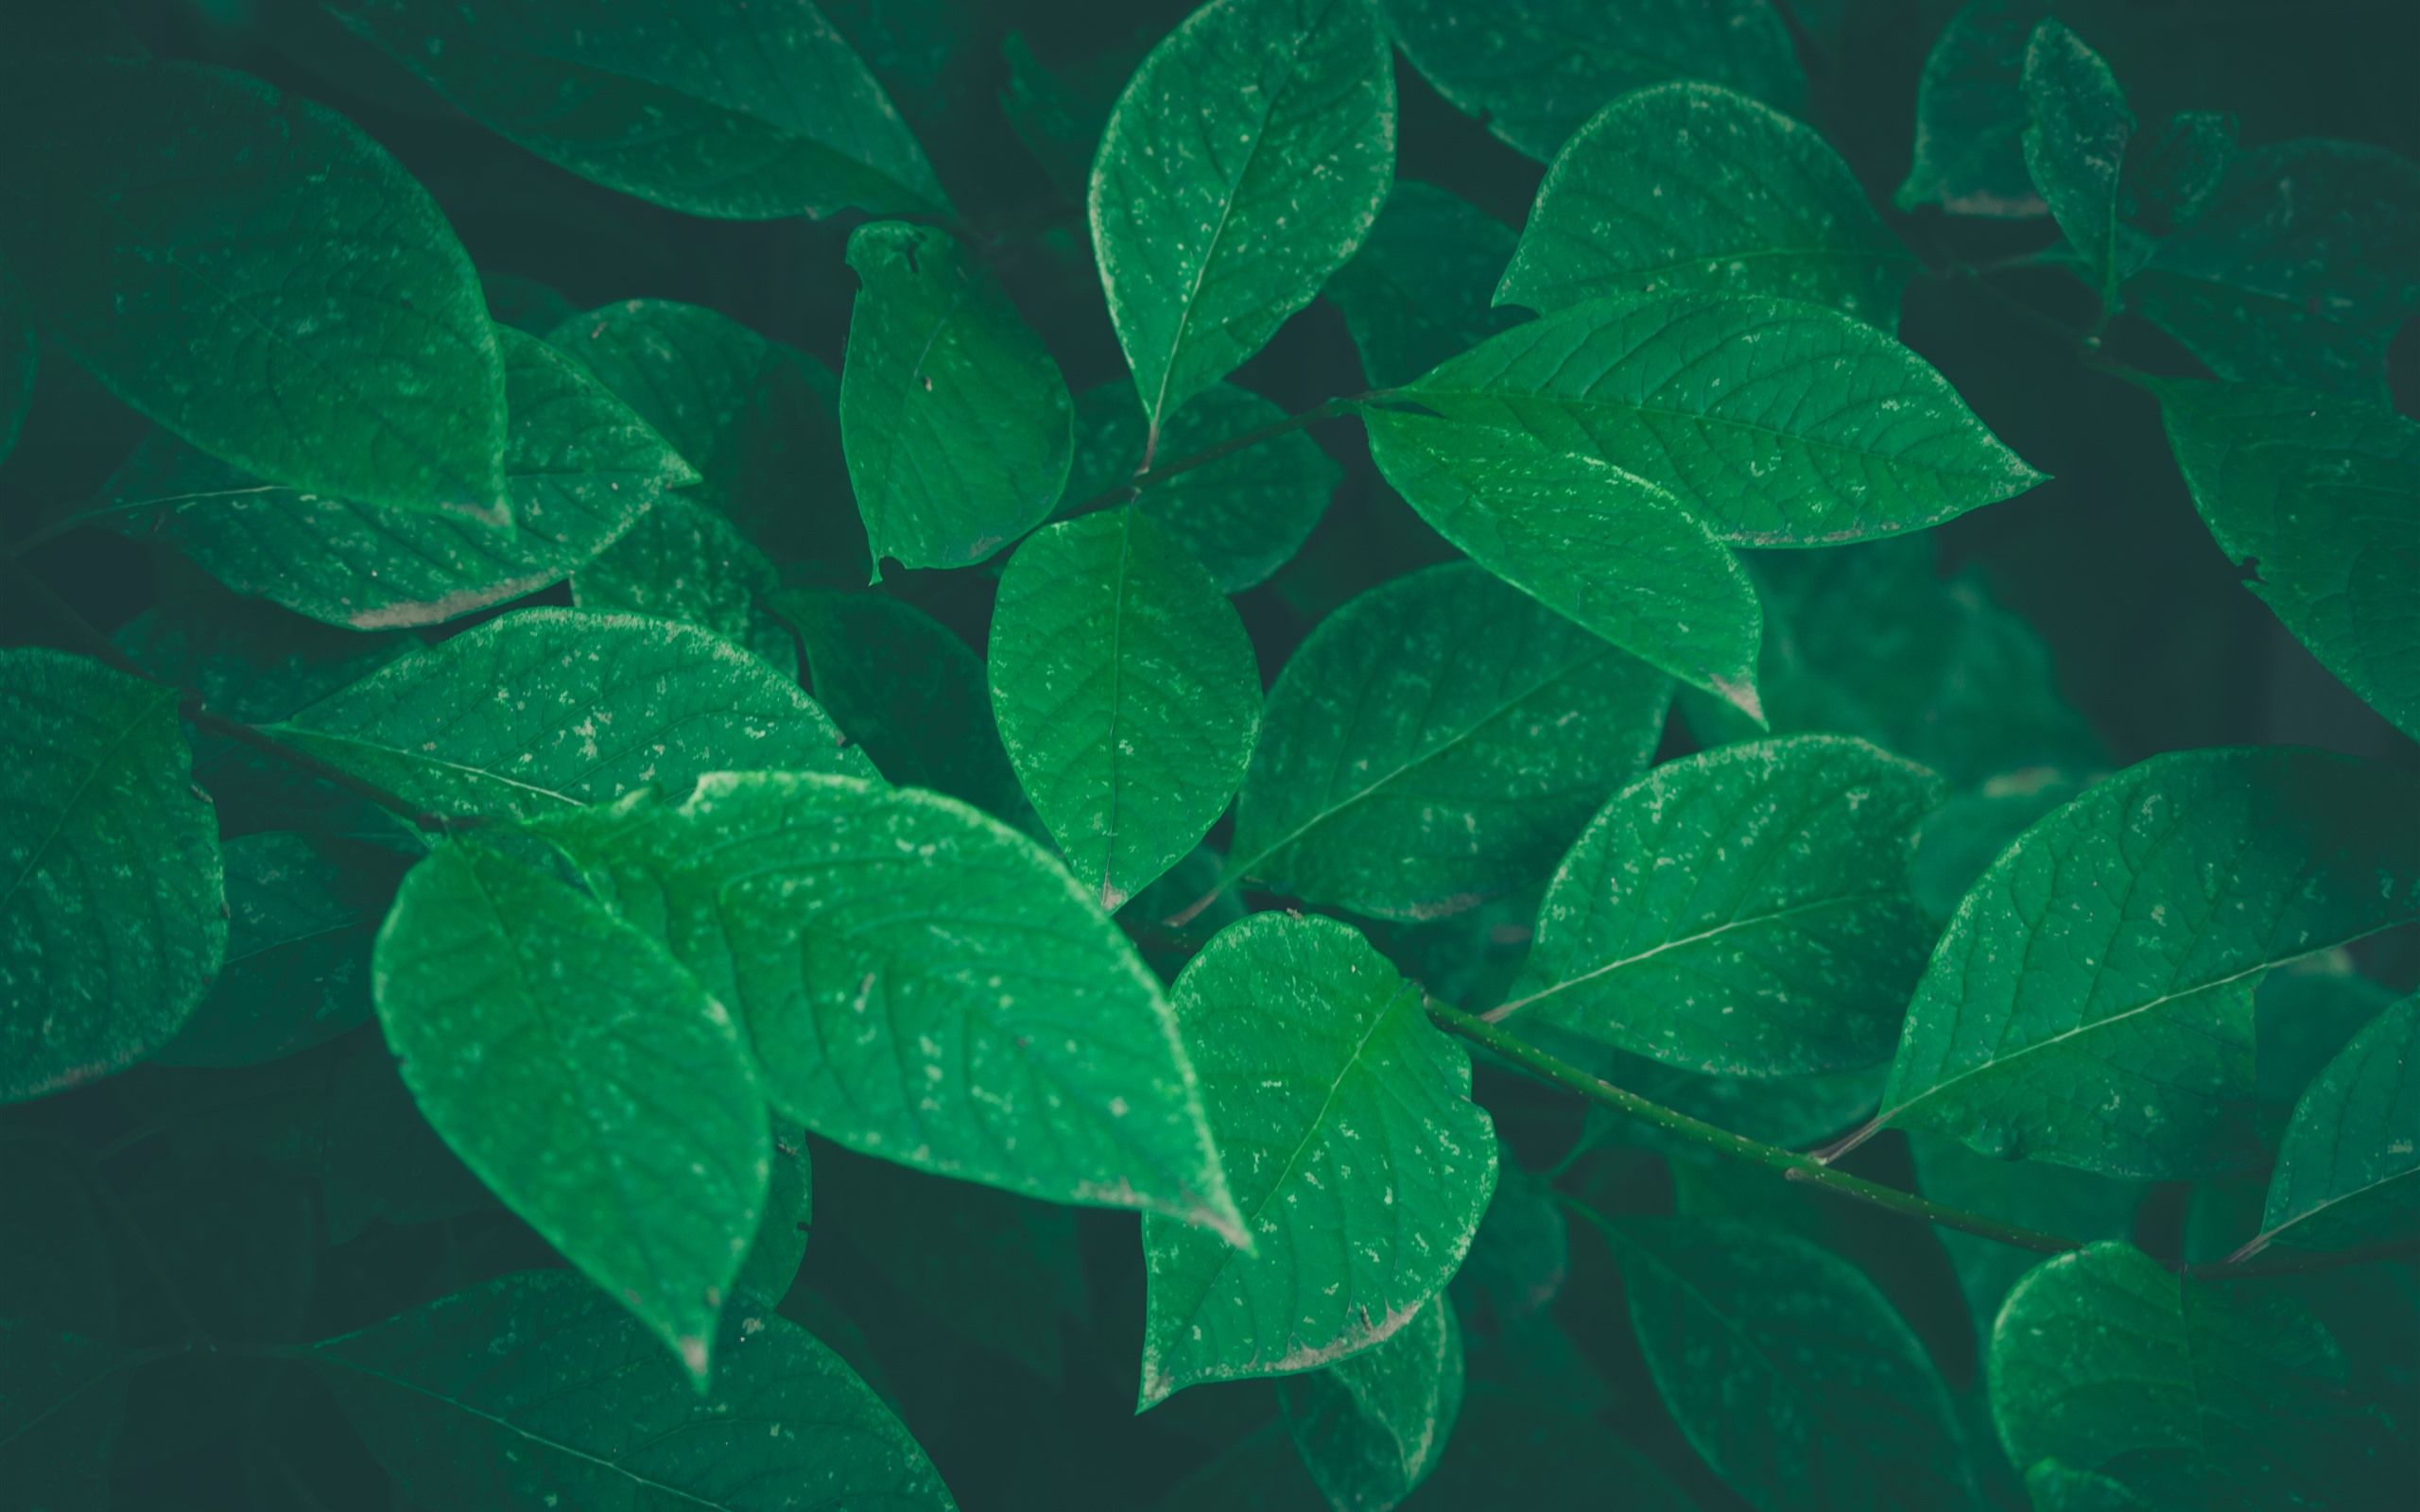  Grüne Blätter Hintergrundbild 2560x1600. Grüne Blätter, Pflanzen, dunstig 3840x2160 UHD 4K Hintergrundbilder, HD, Bild